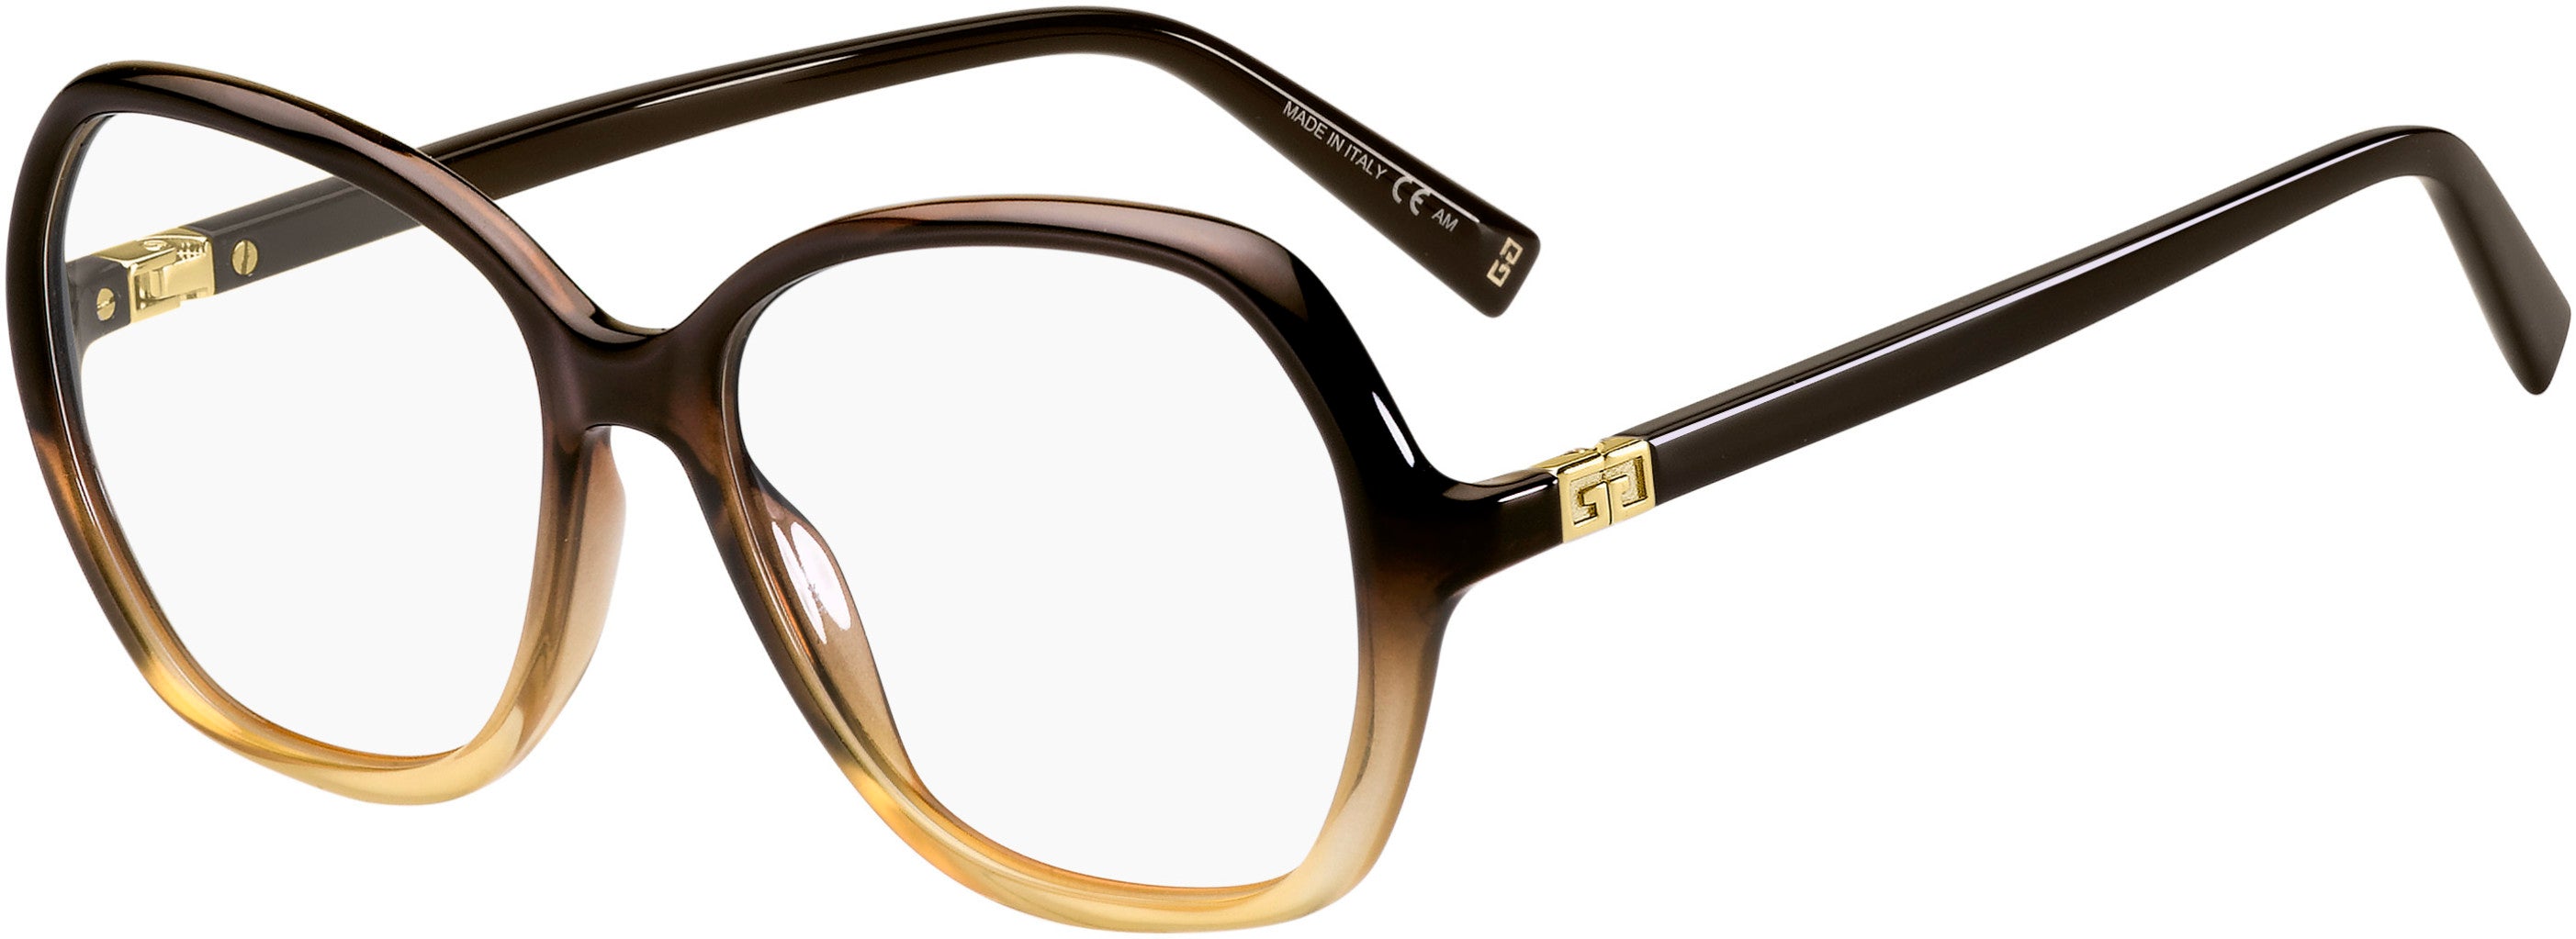  Givenchy 0141 Rectangular Eyeglasses 0GLN-0GLN  Brown Yellow (00 Demo Lens)